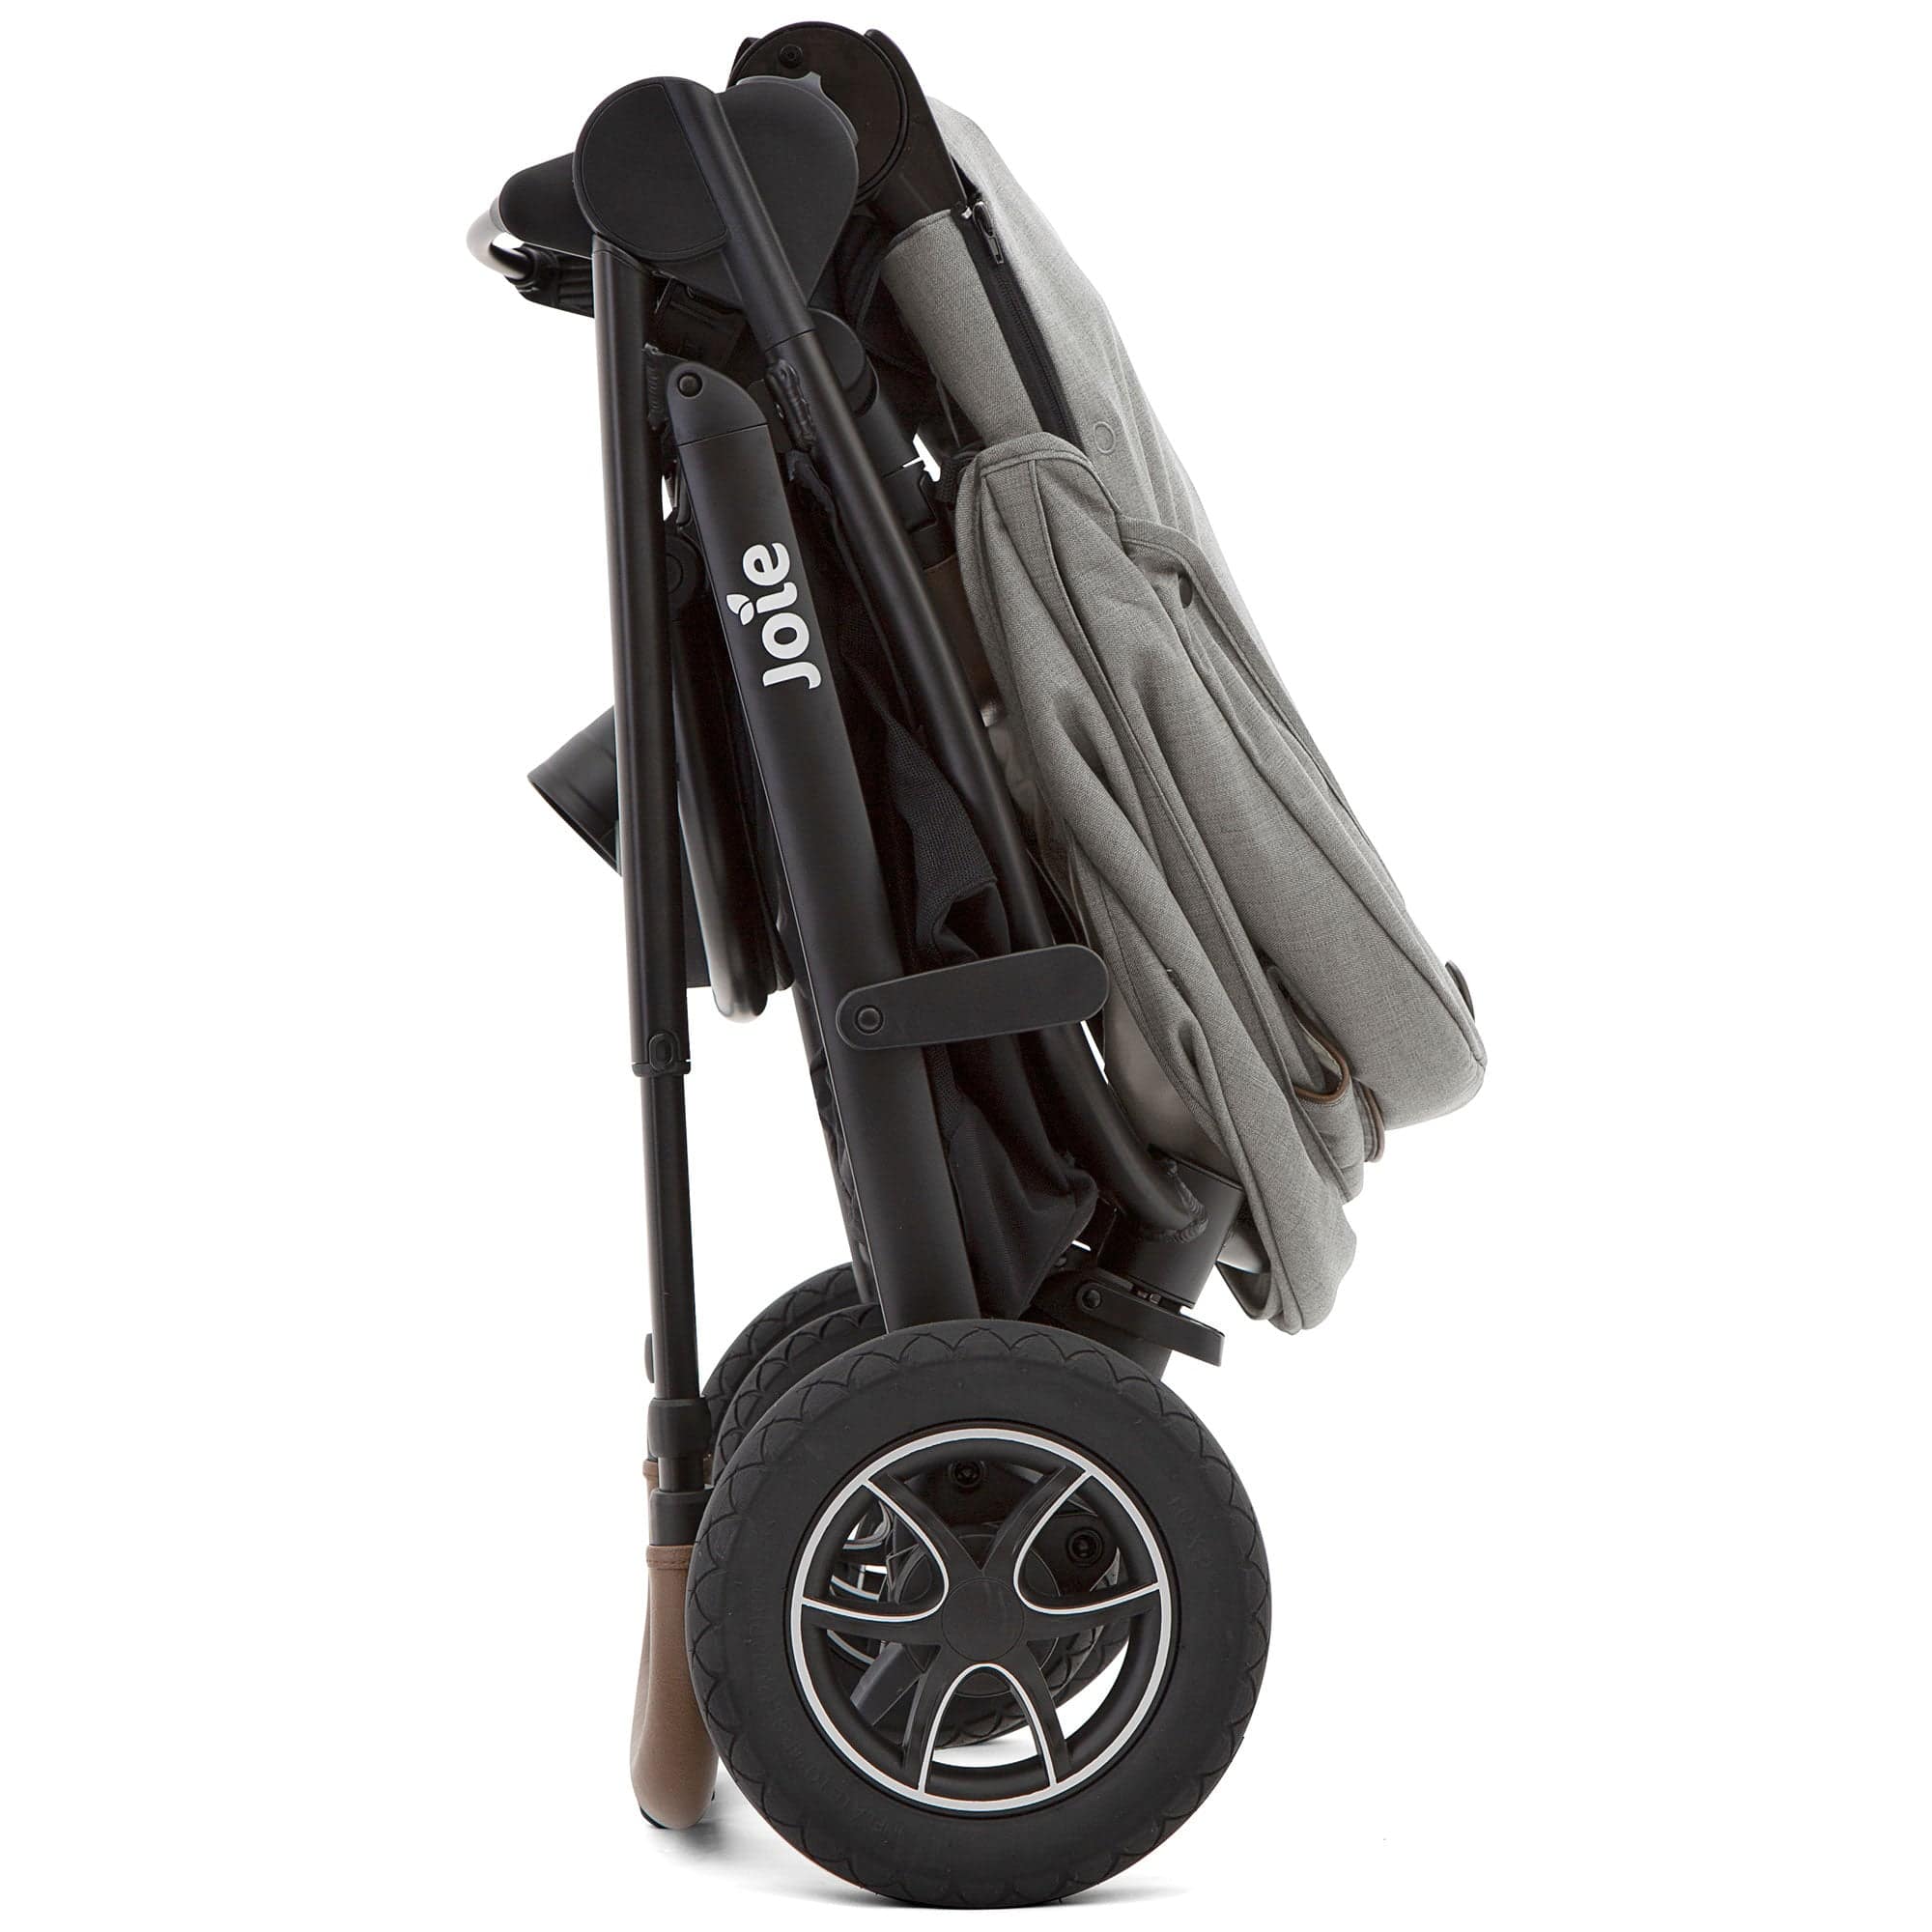 Joie Pushchairs & Buggies Joie Versatrax Stroller and Ramble XL Carrycot in Pebble Z2BJVTRX1004UK